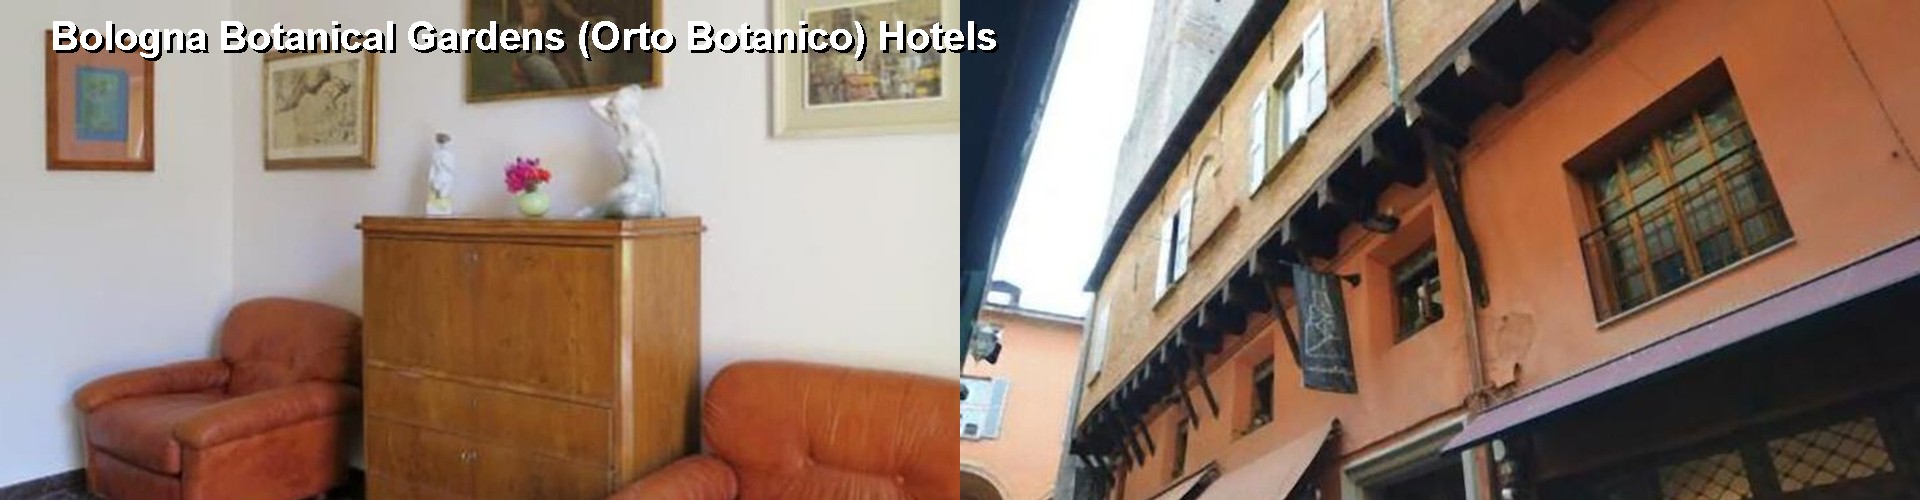 5 Best Hotels near Bologna Botanical Gardens (Orto Botanico)